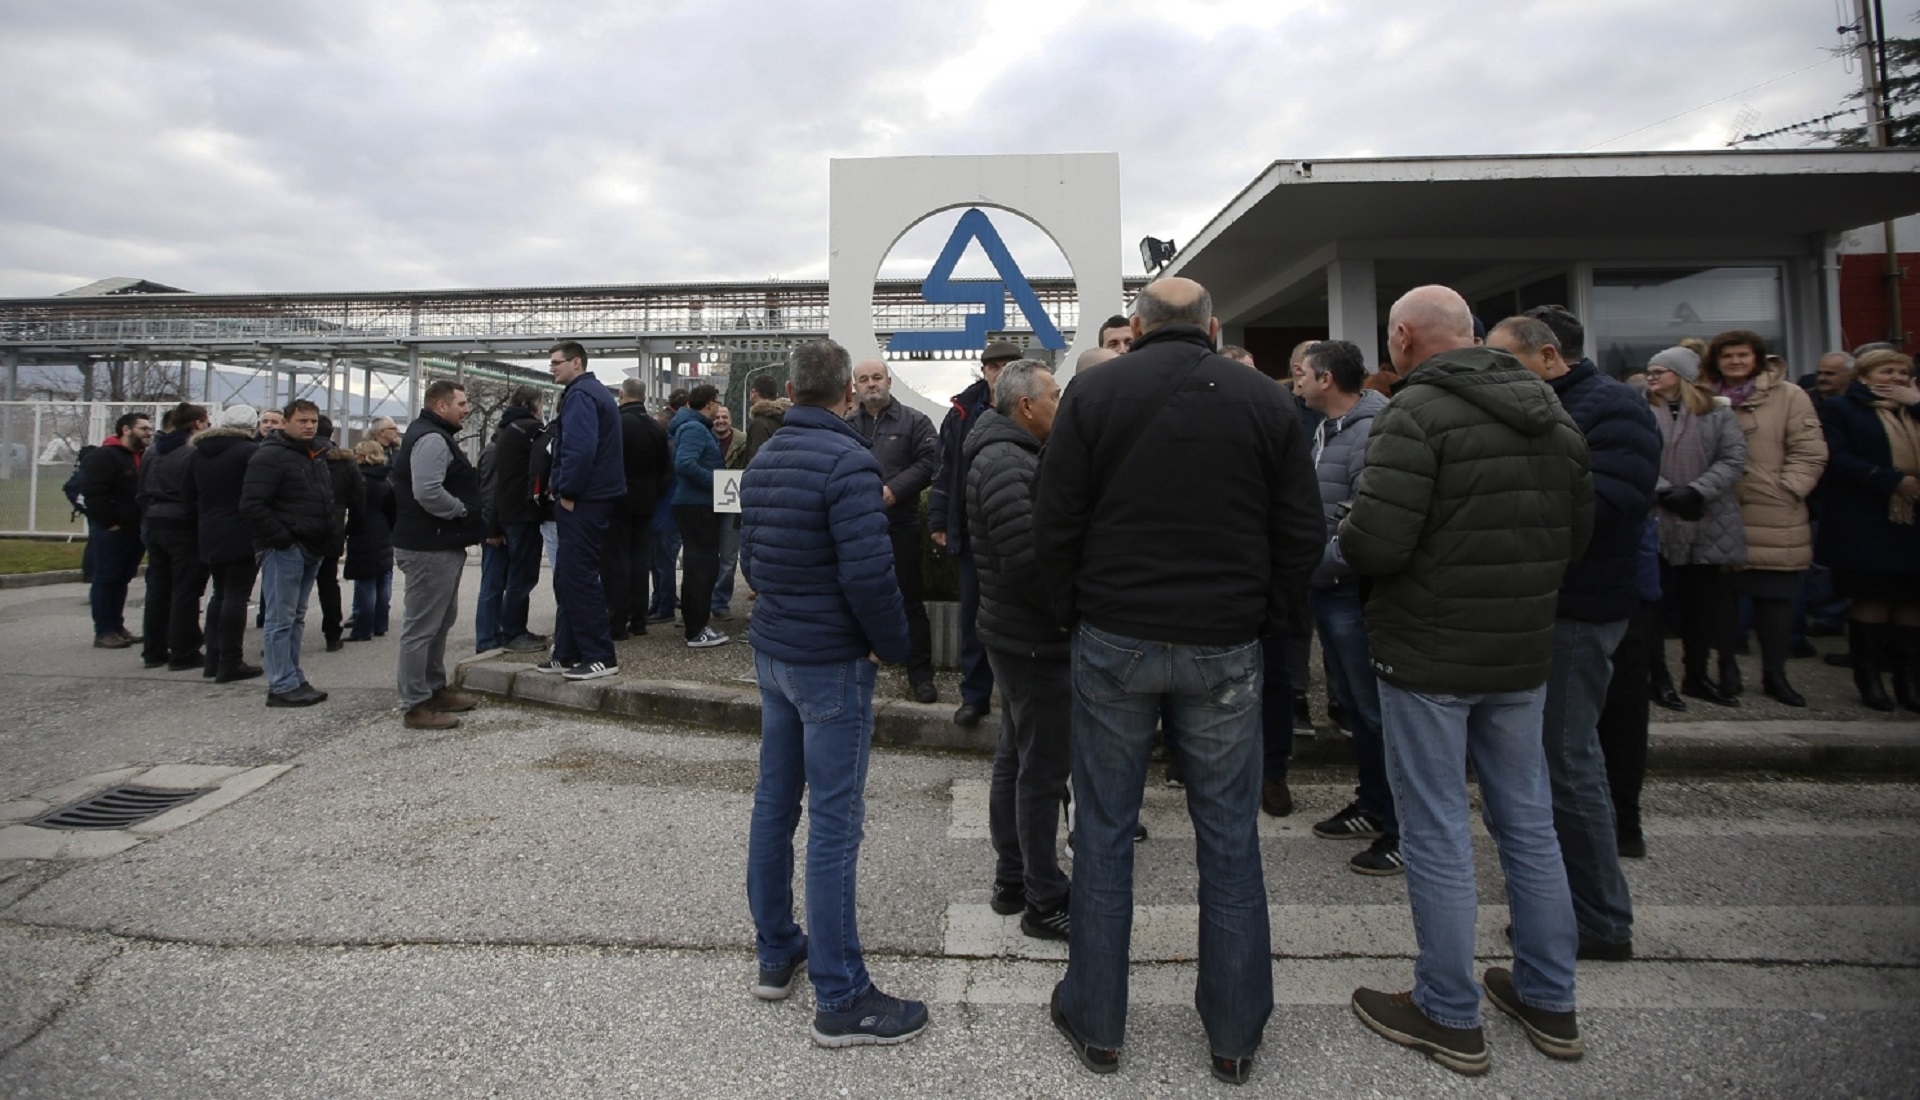 16.12.2019.,Mostar - Prosvjed radnika Aluminija uoci odluke Nadzornog odbora o ponudi kinesko-izraelskog konzorcija
Photo: Denis Kapetanovic/PIXSELL